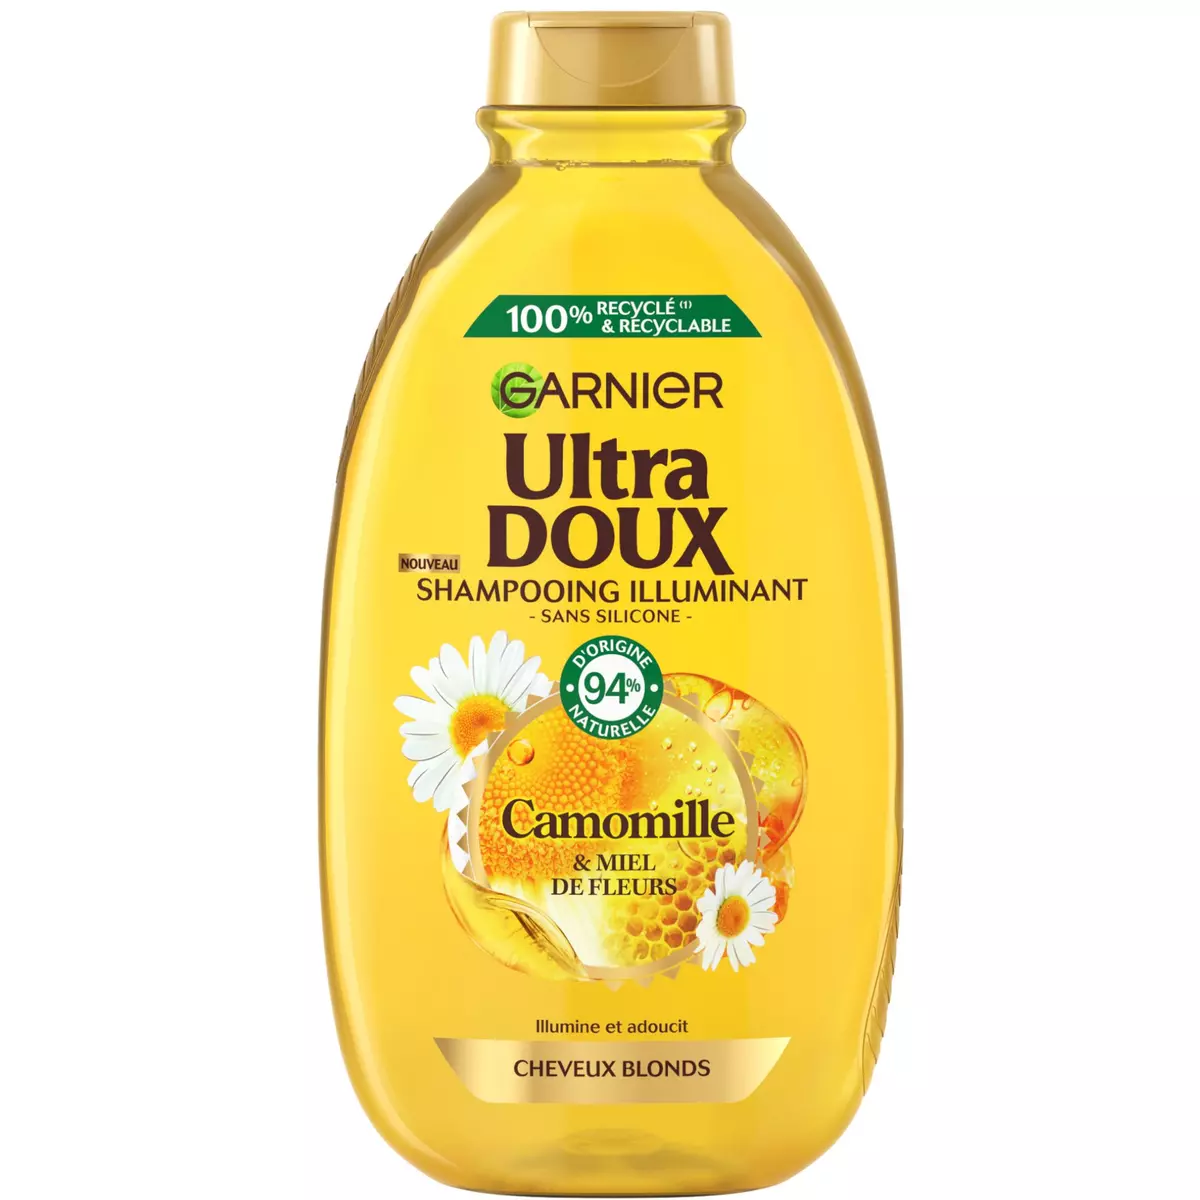 GARNIER ULTRA DOUX Shampoing illuminant camomille et miel de fleurs cheveux blonds 400ml